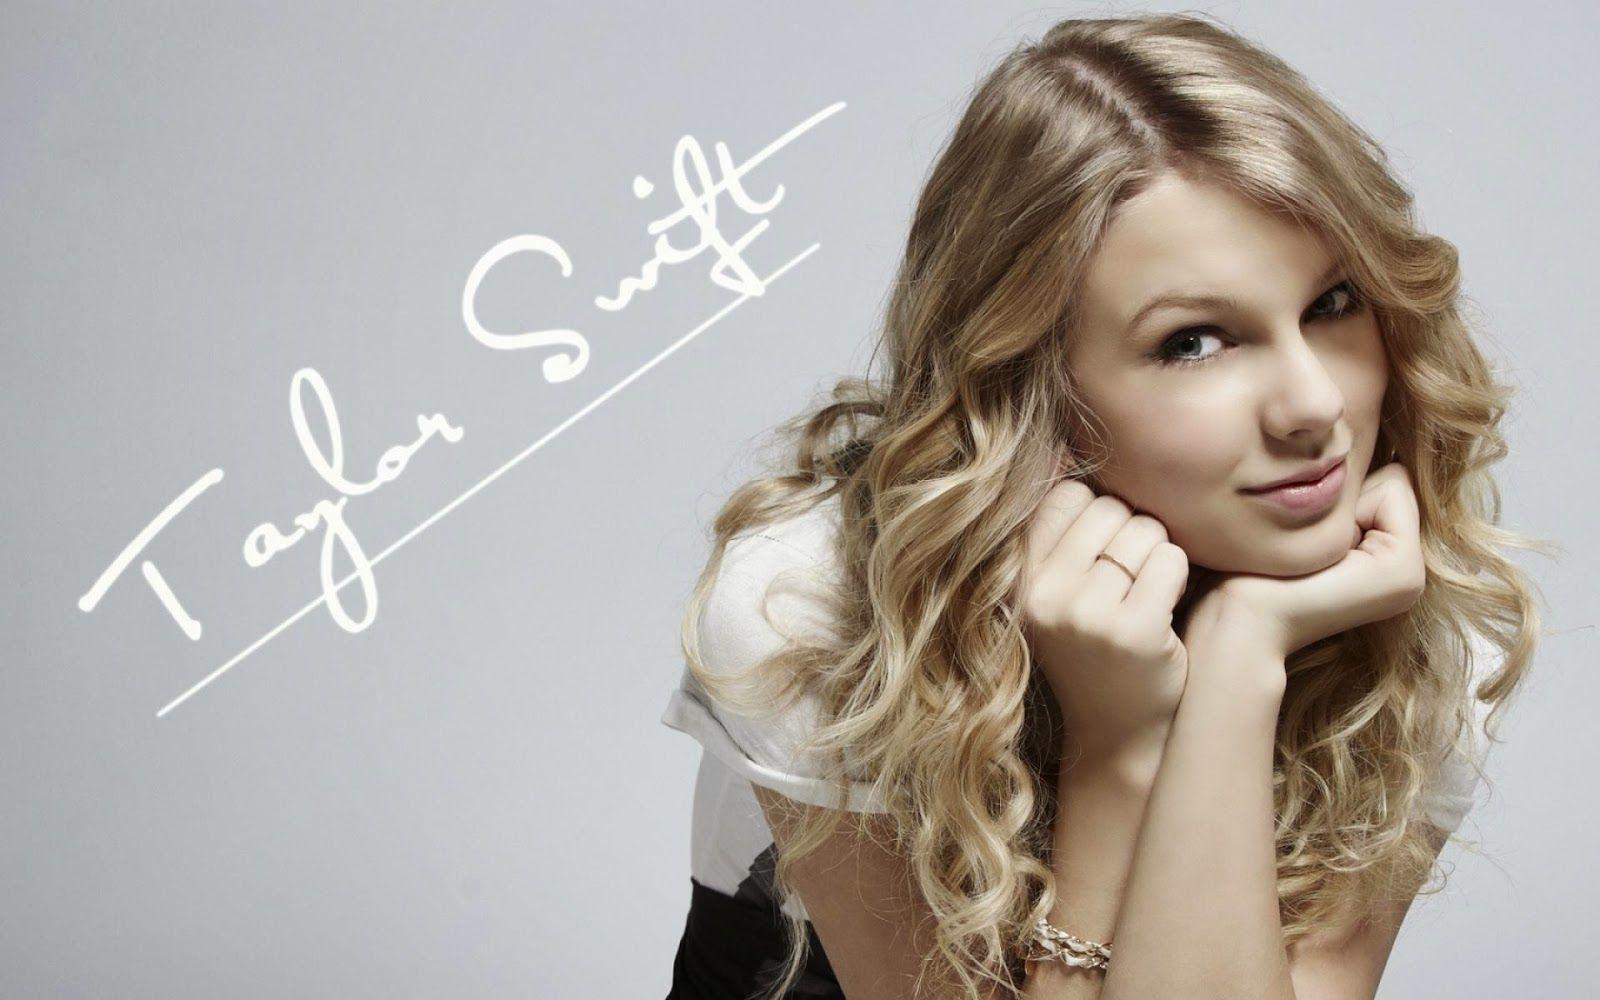 Picture: Taylor Swift HD Wallpaper. Taylor swift